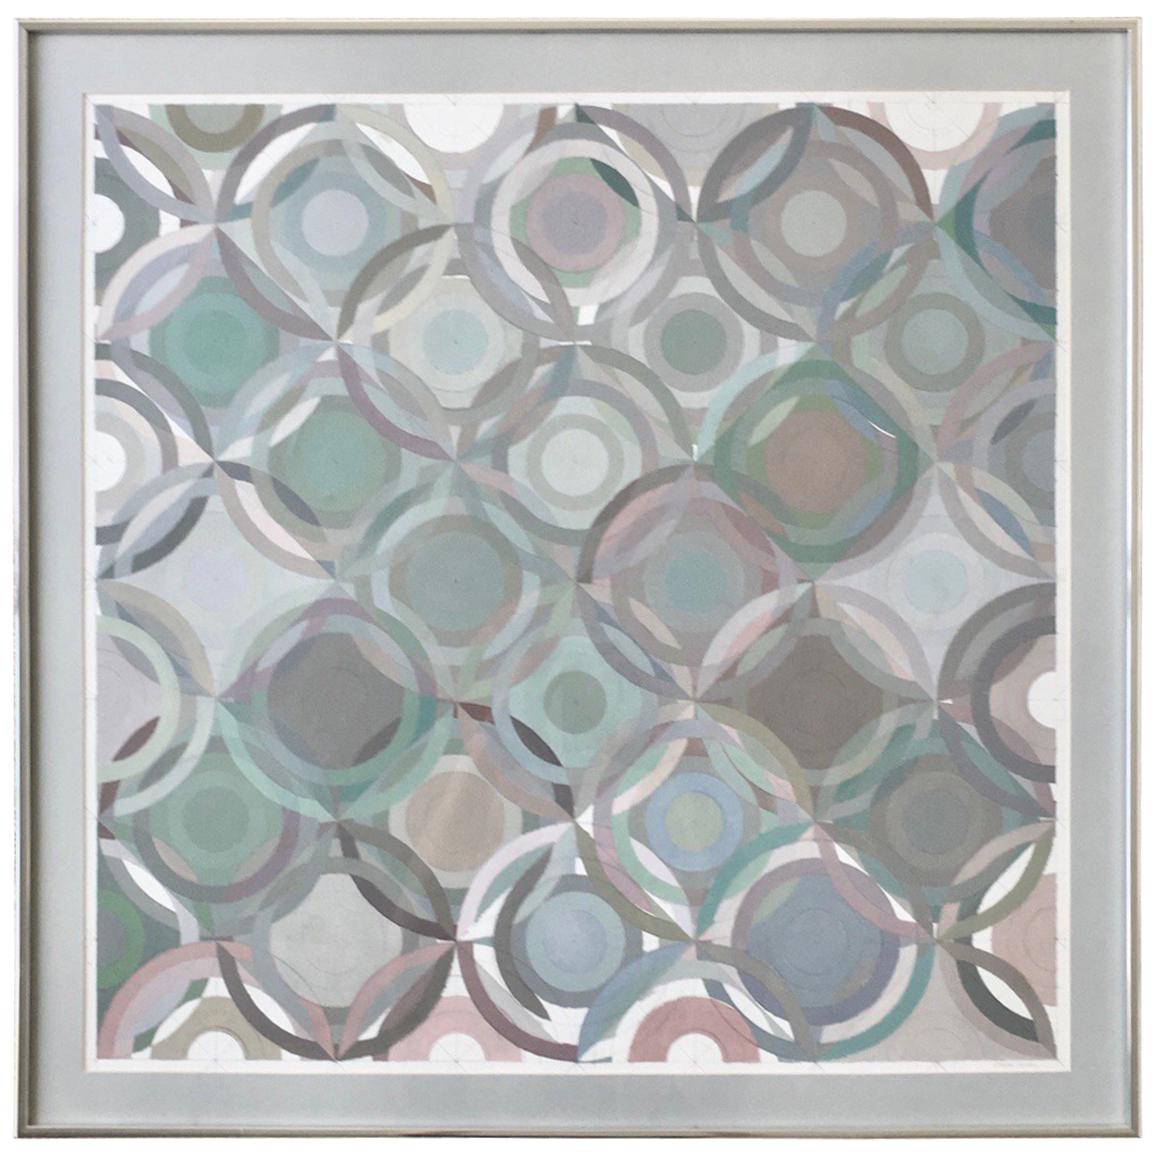 Framed Abstract Geometric Gouache on Paper by Stevan Kissel